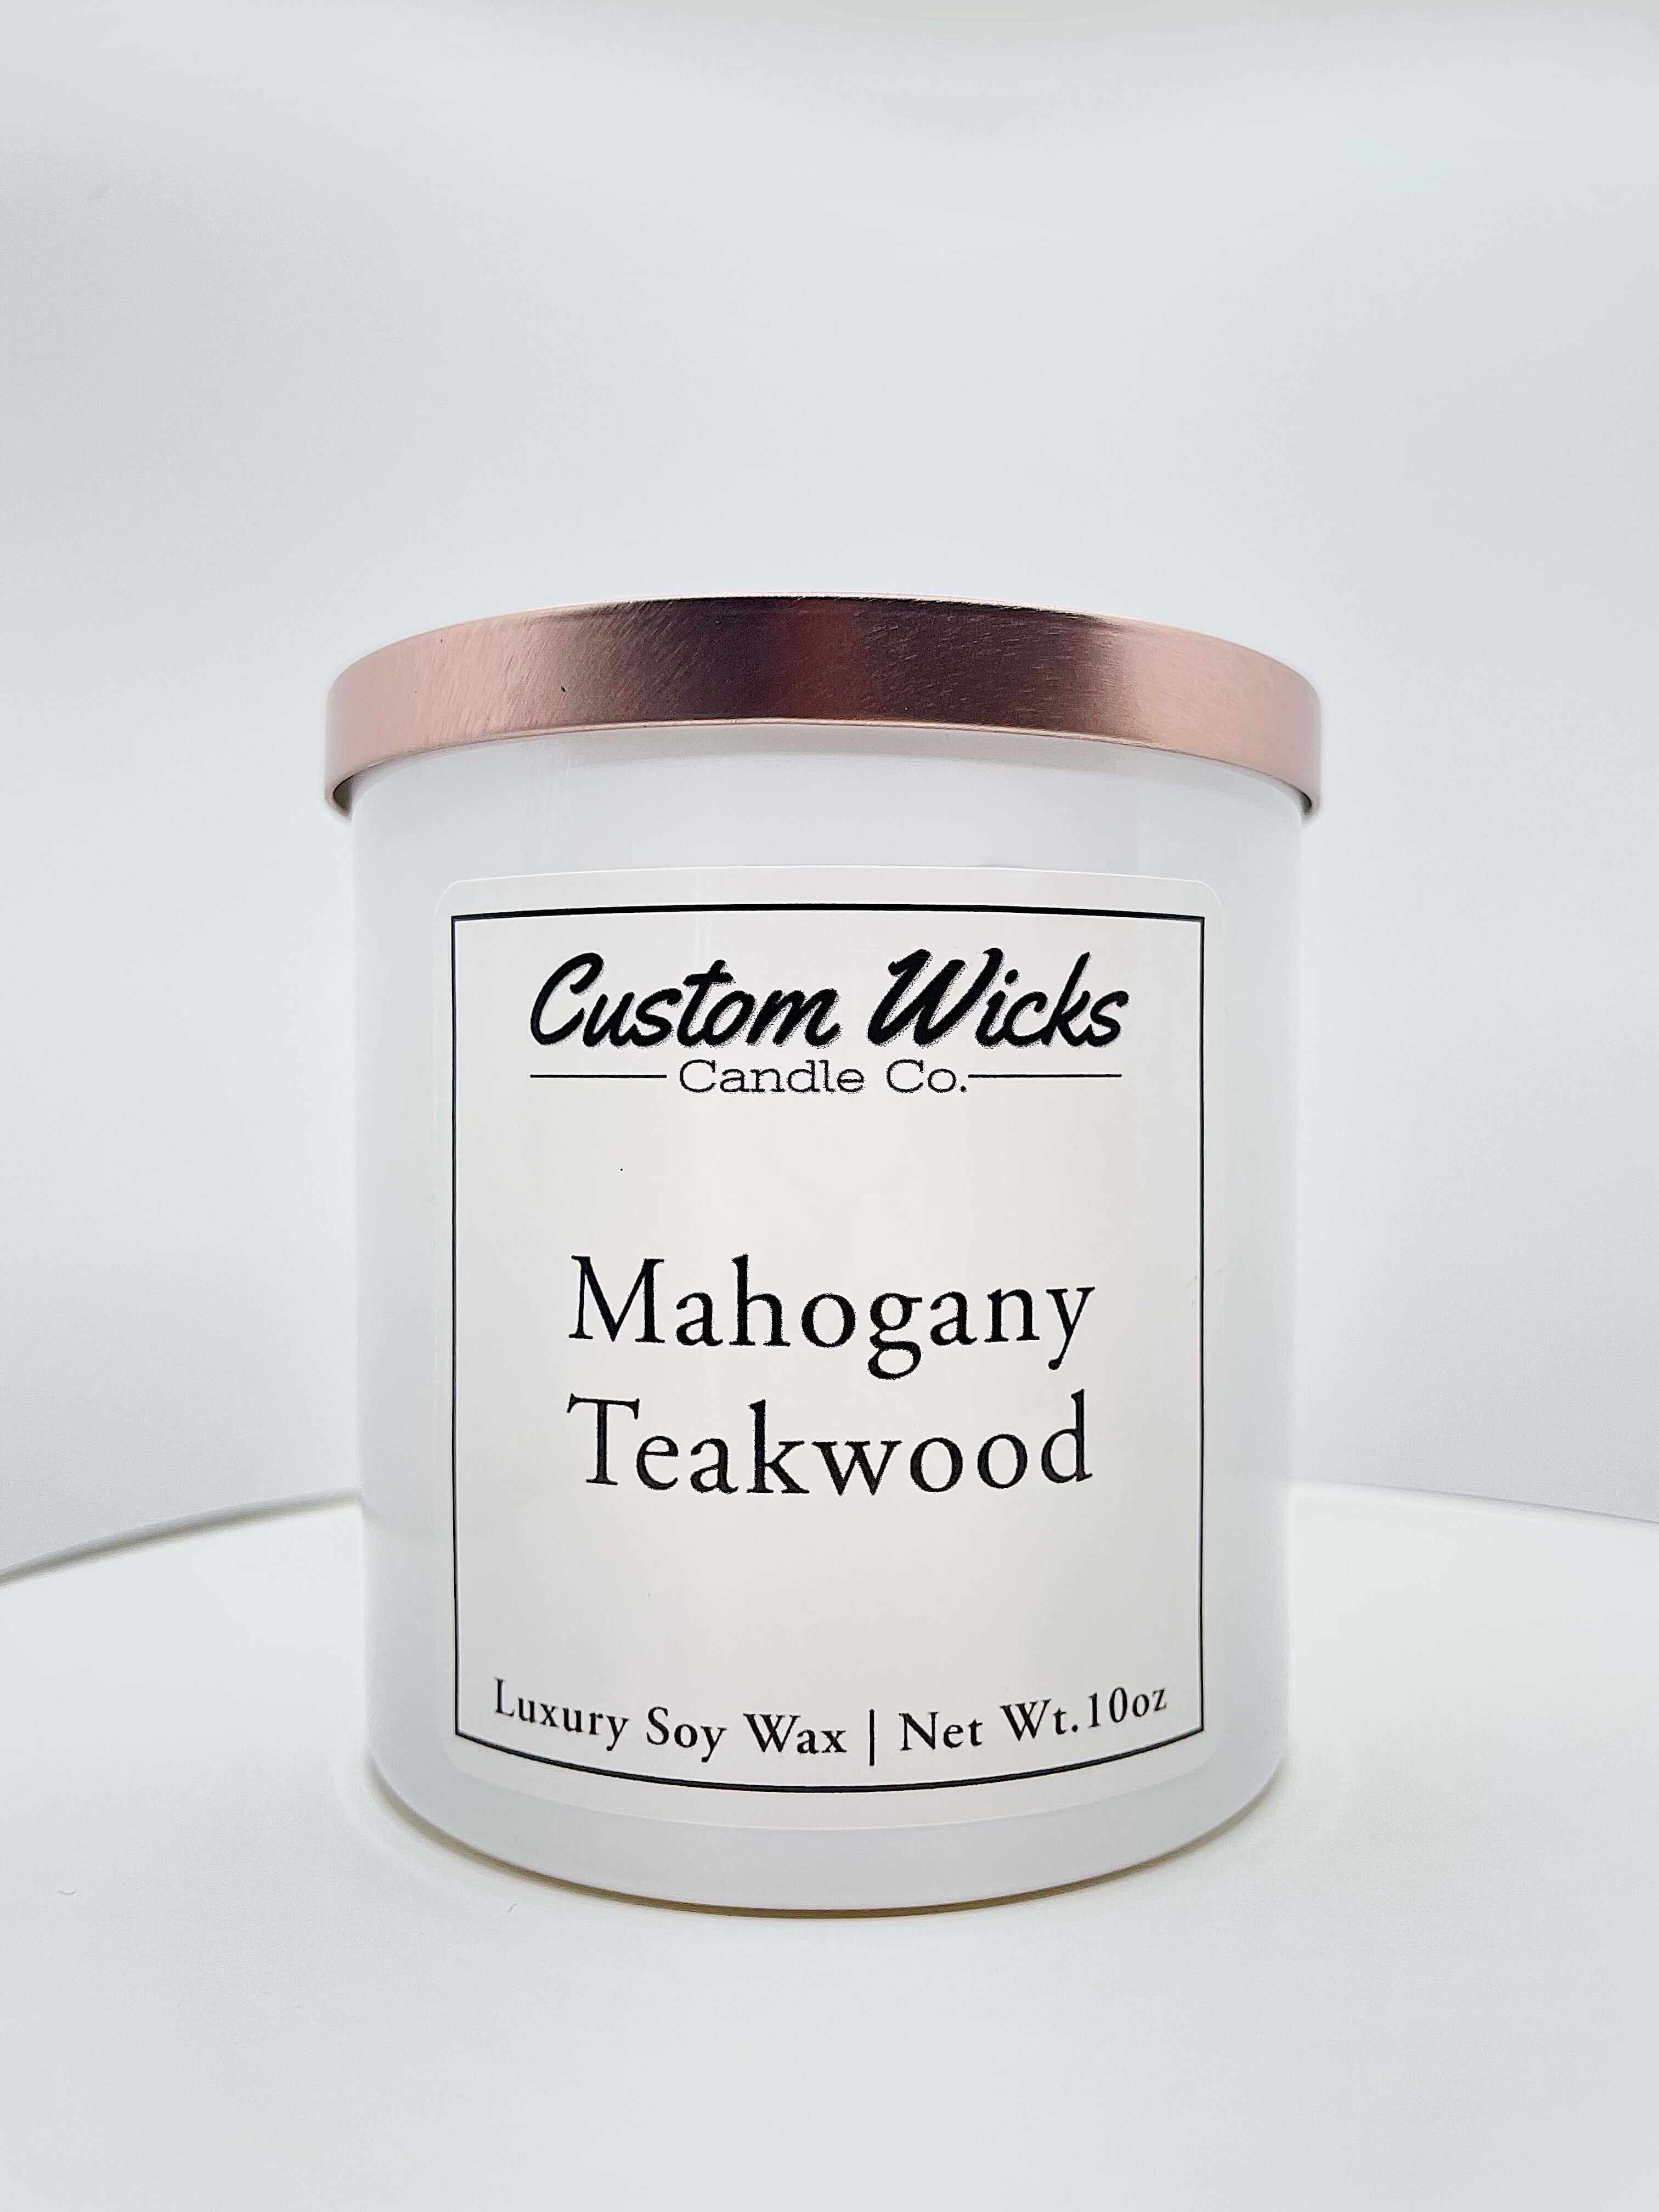 Mahogany Teakwood Scented Candles